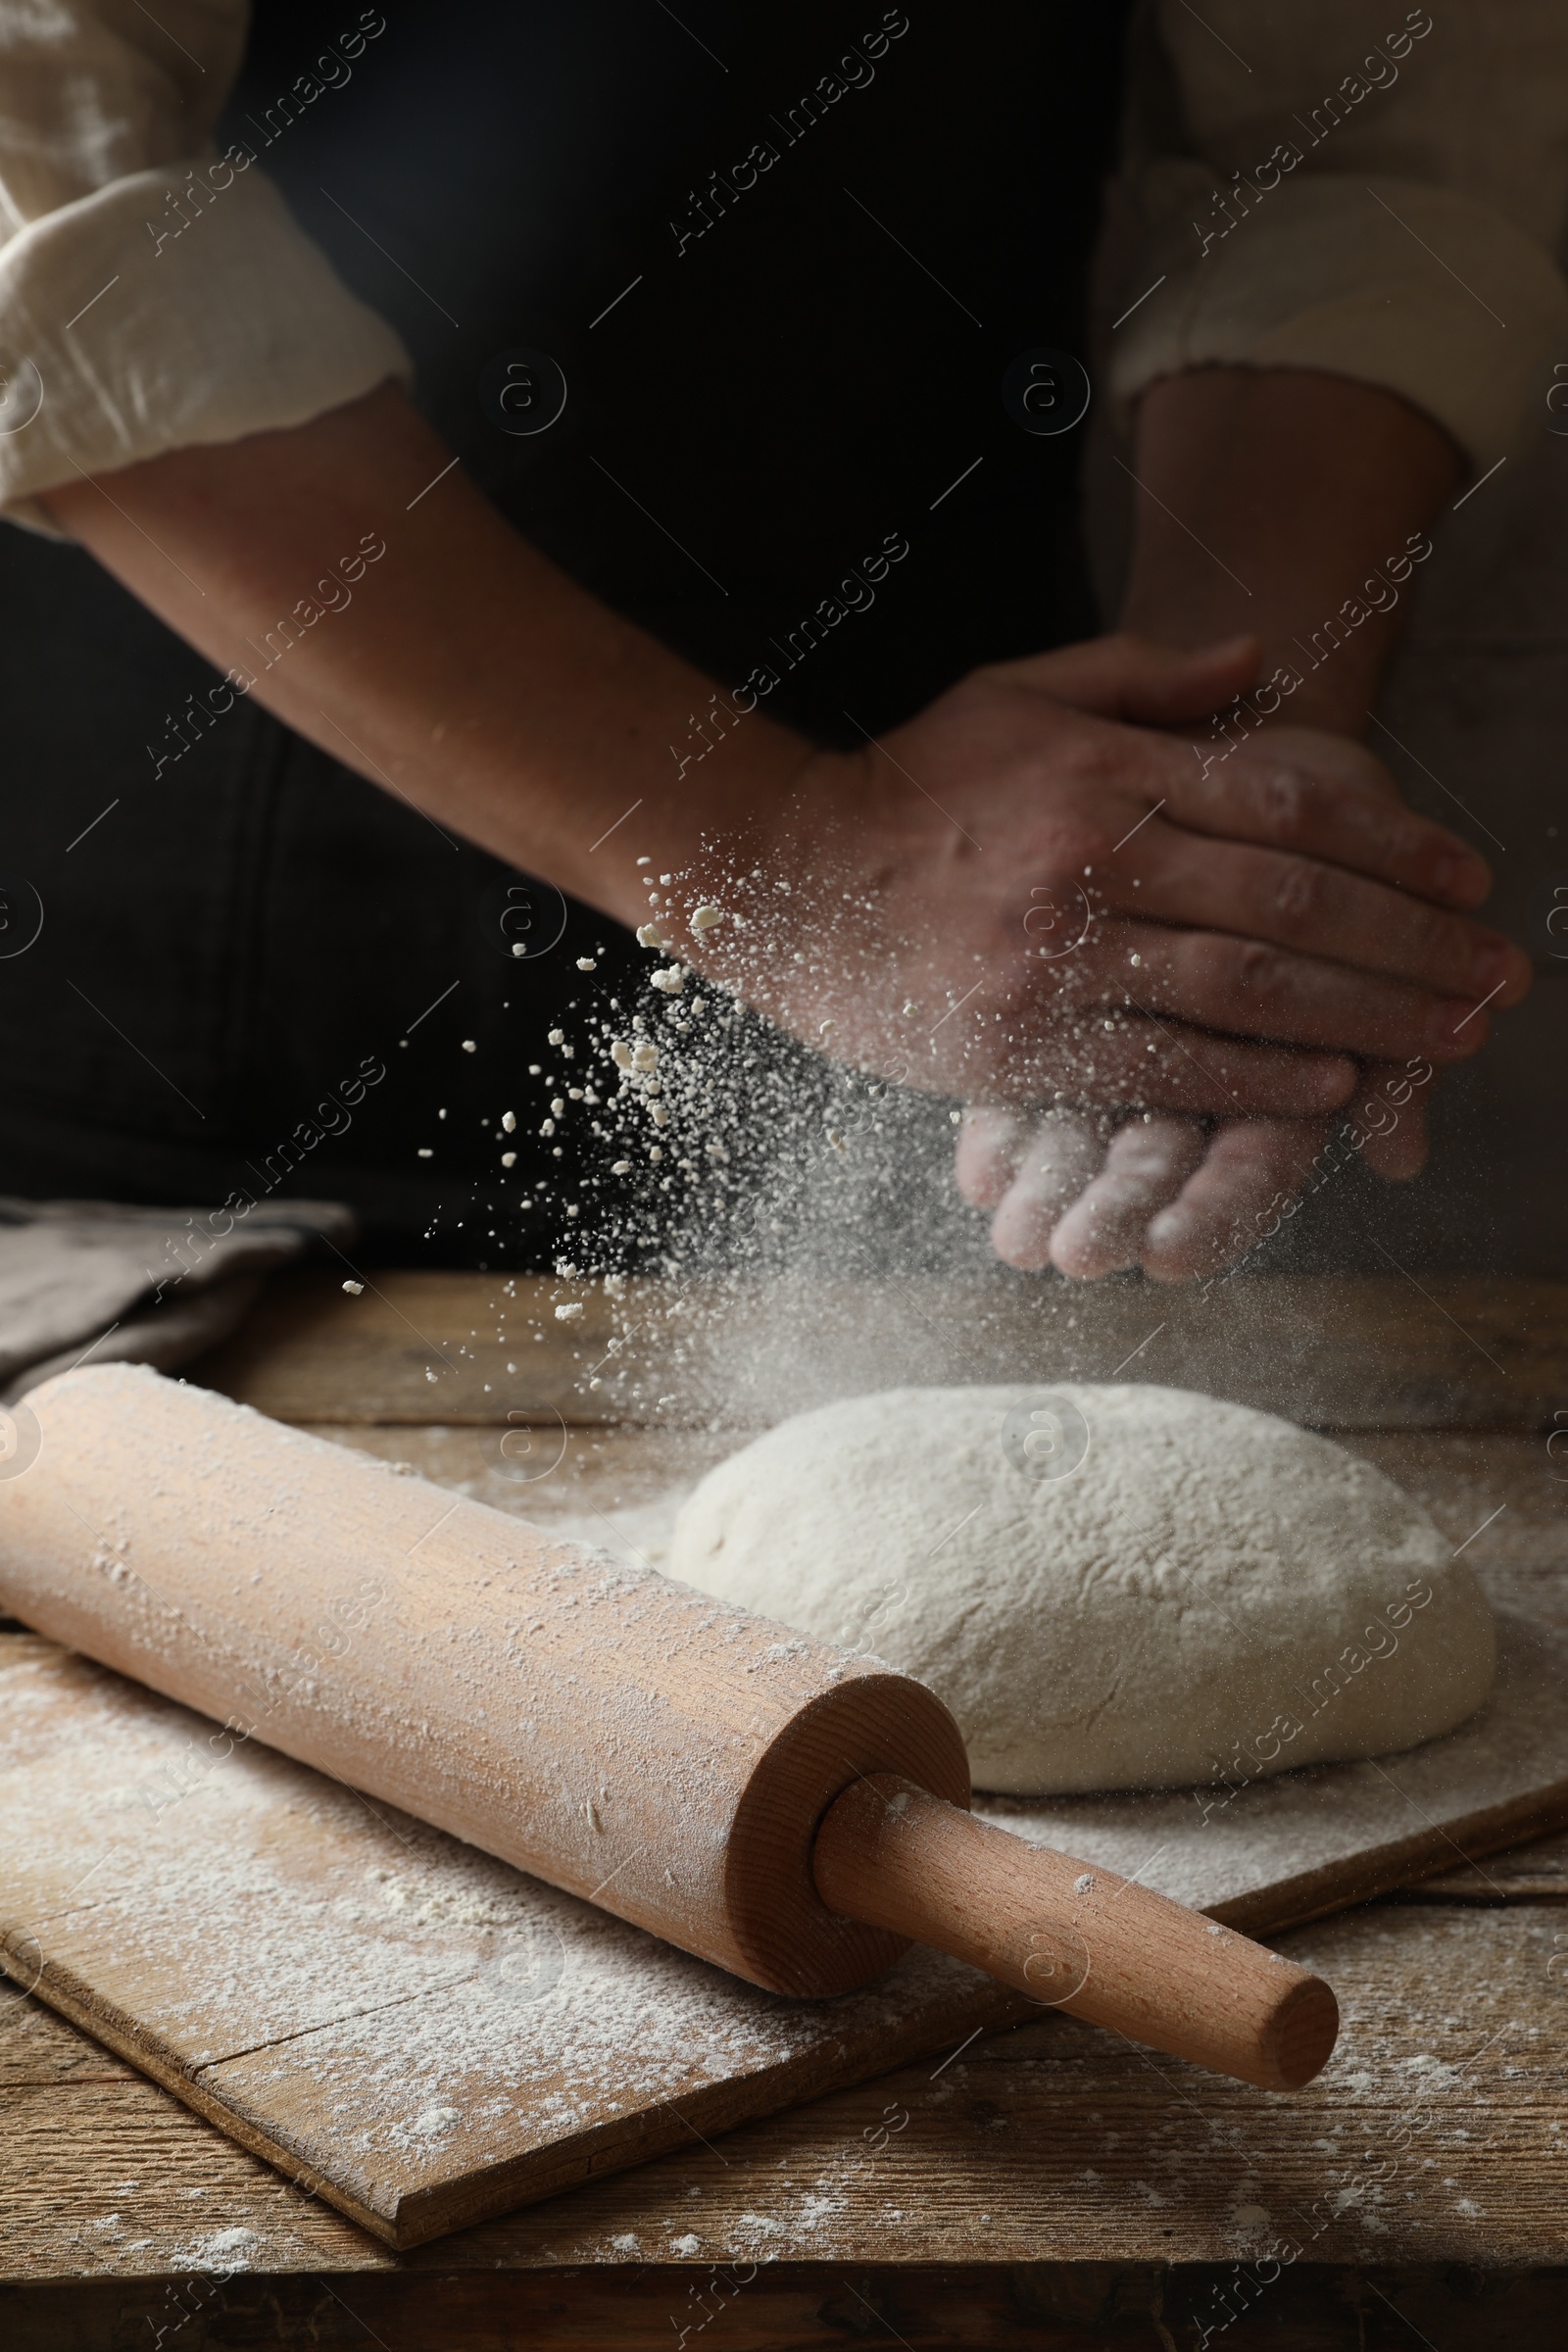 Photo of Man sprinkling flour over dough at wooden table, closeup